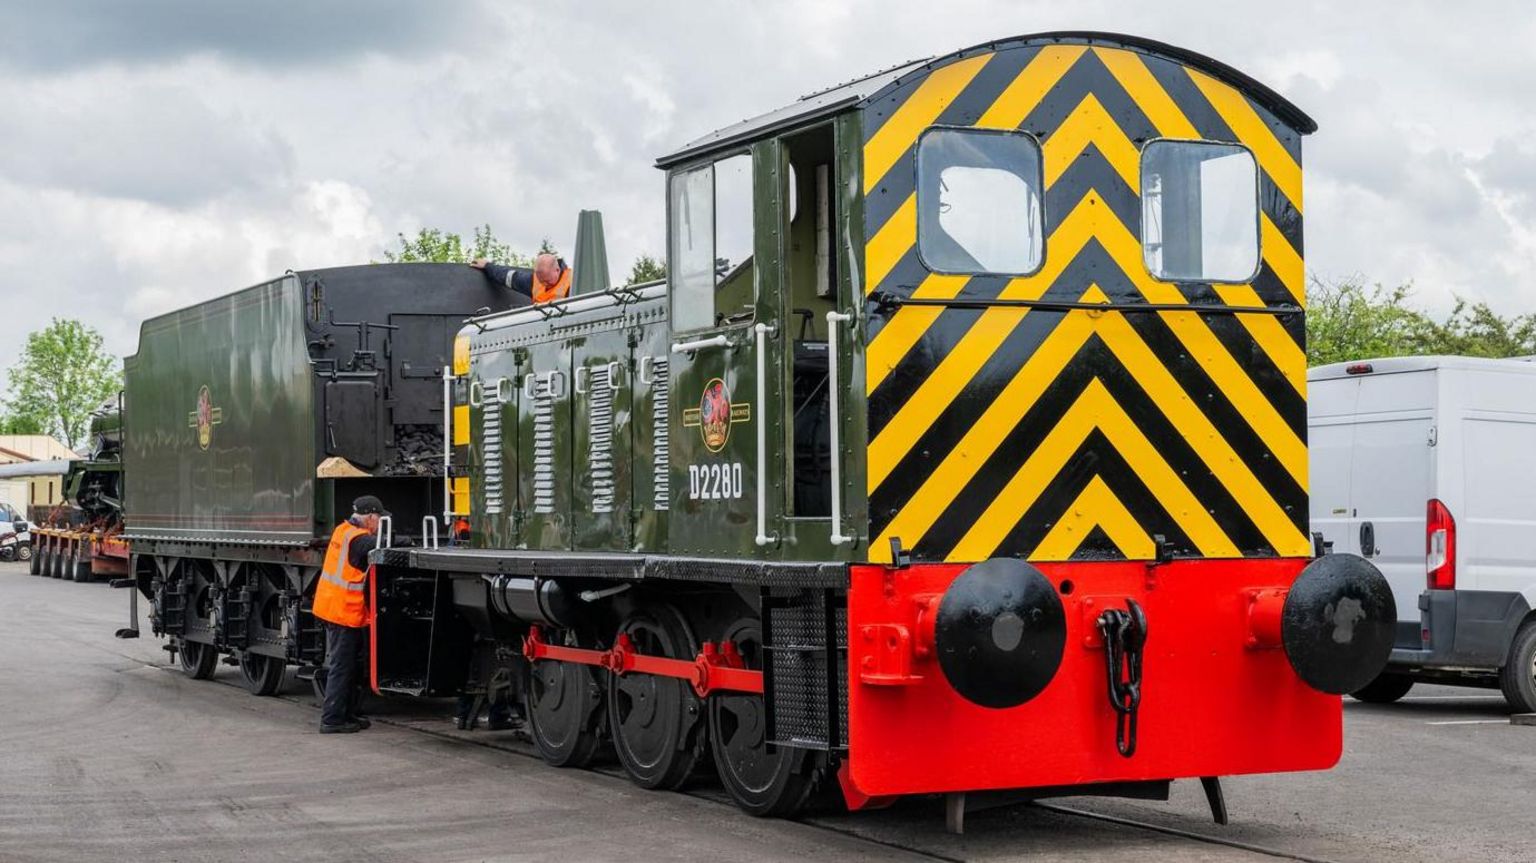 Drewry 0-6 0DM shunter, British Rail Class 04 No. D2280